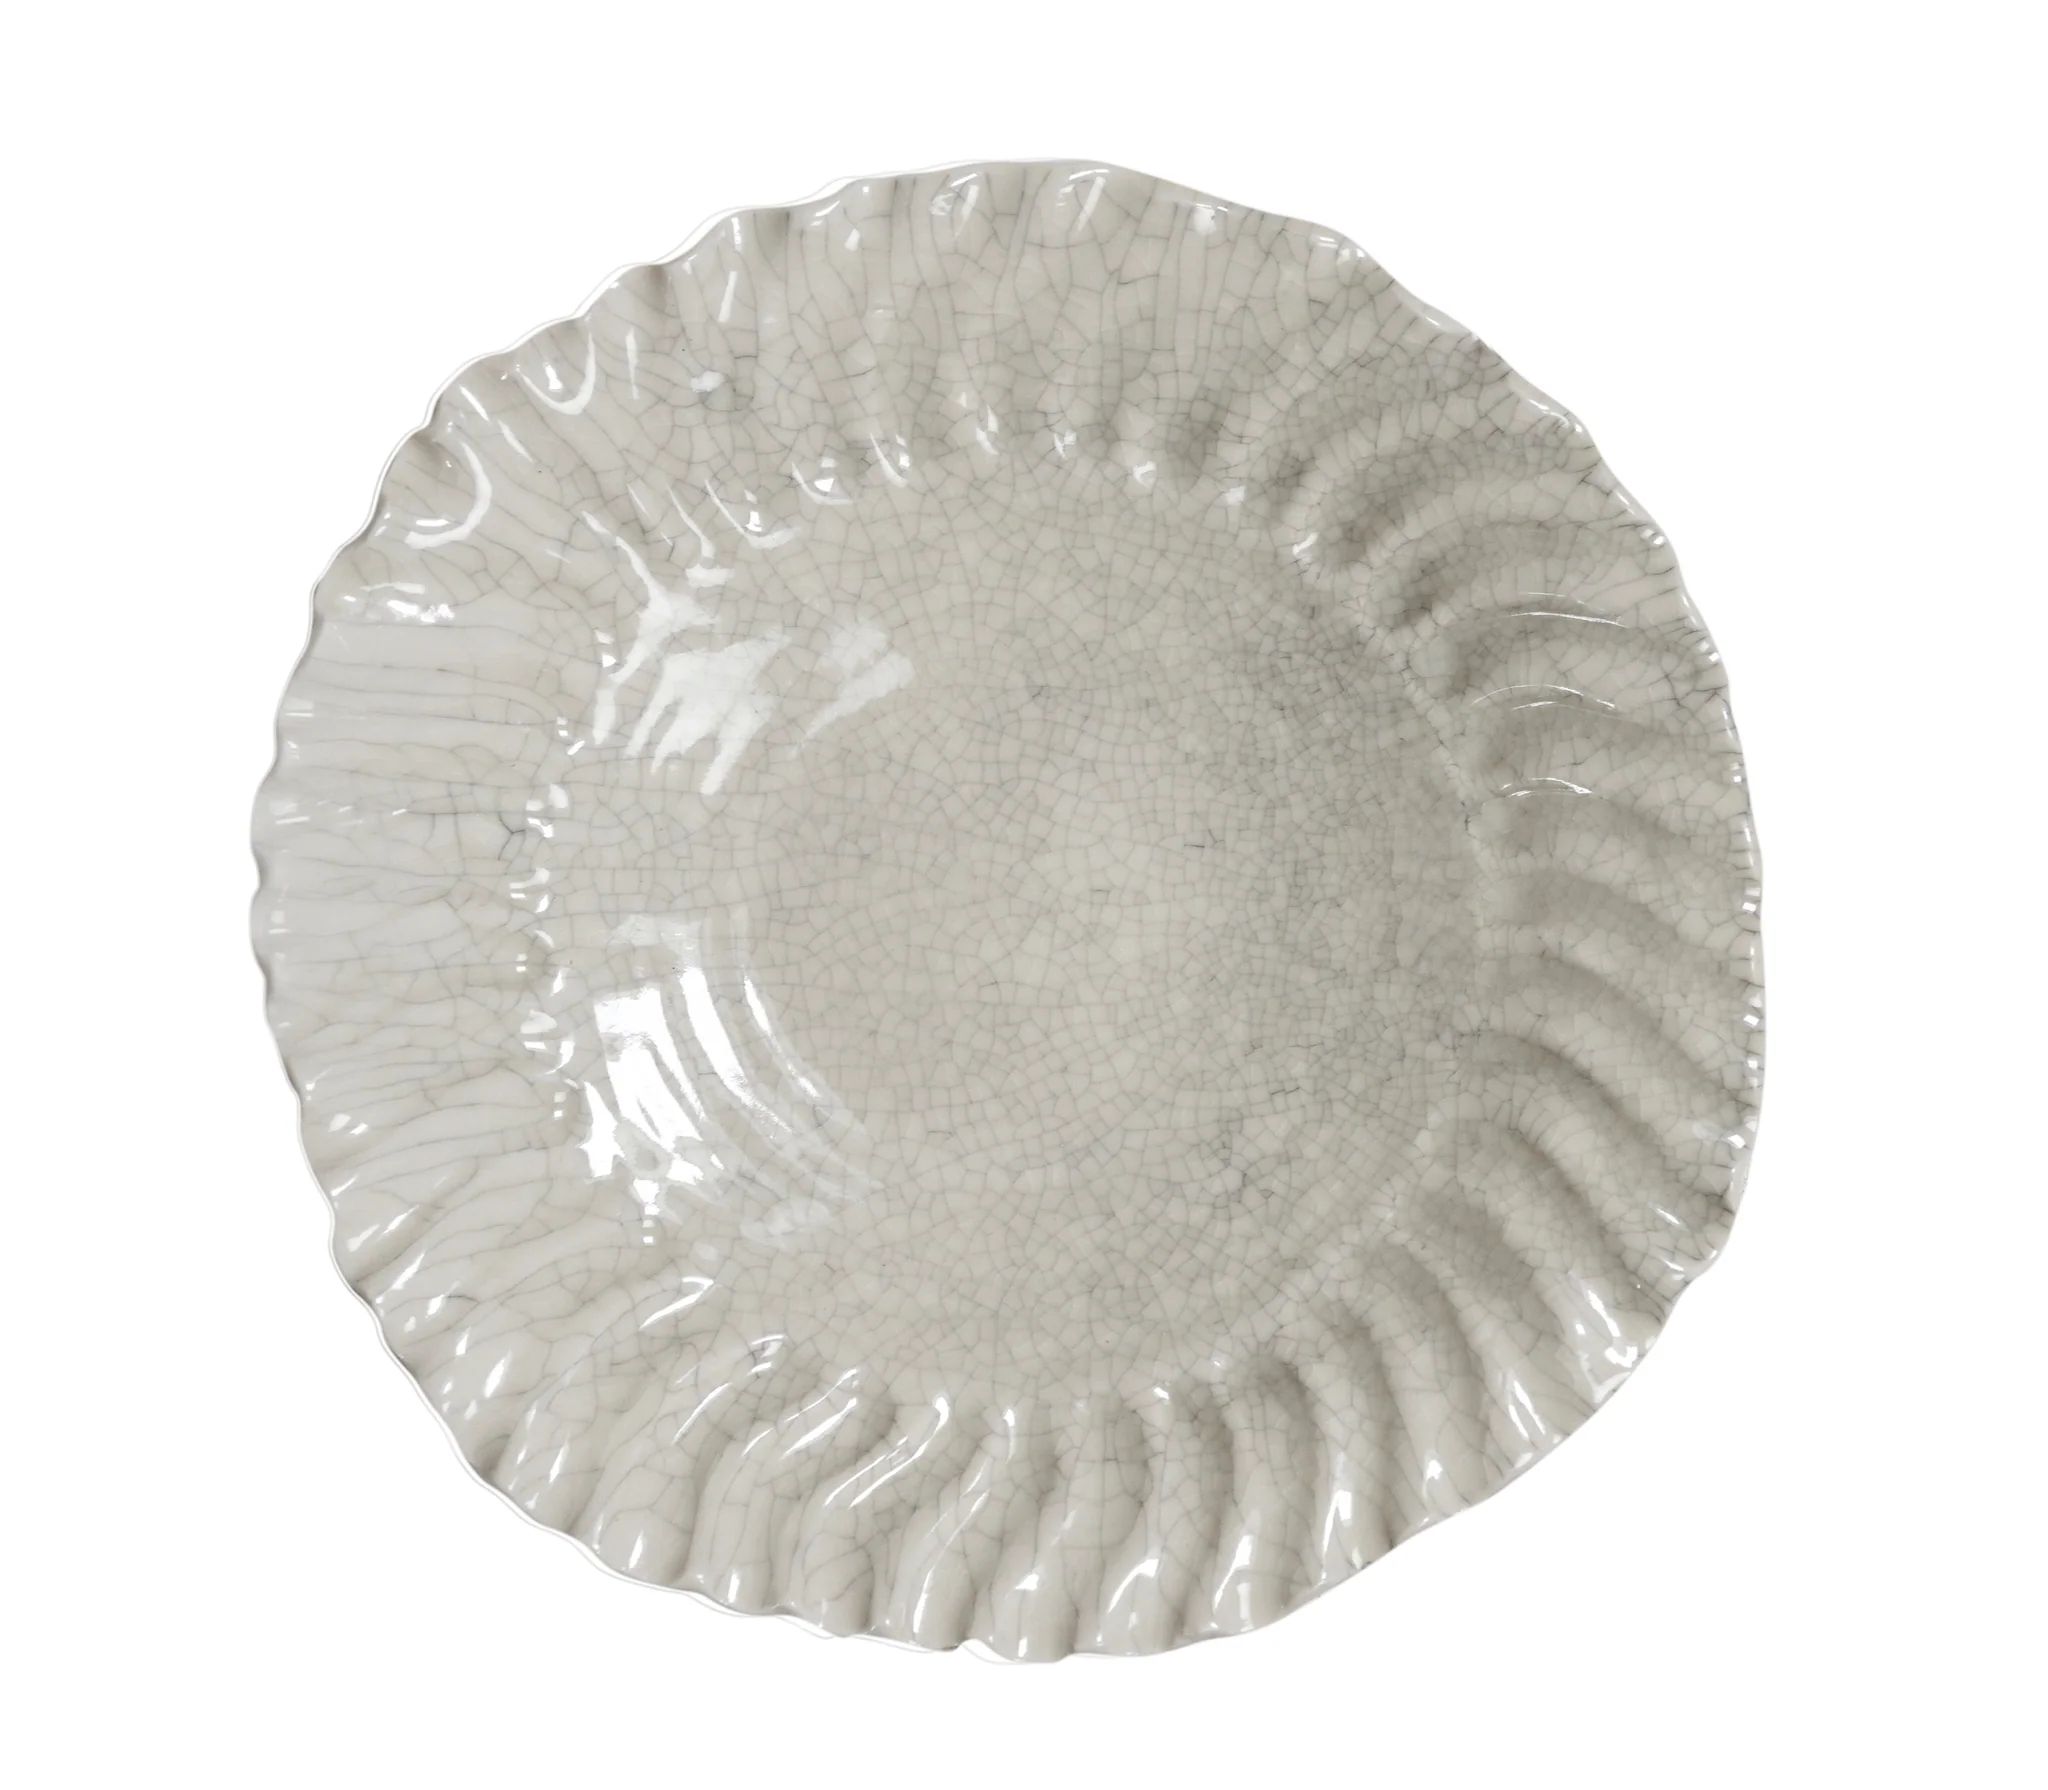 Jars Dashi Quartz Craquele (Crackled) Plate S